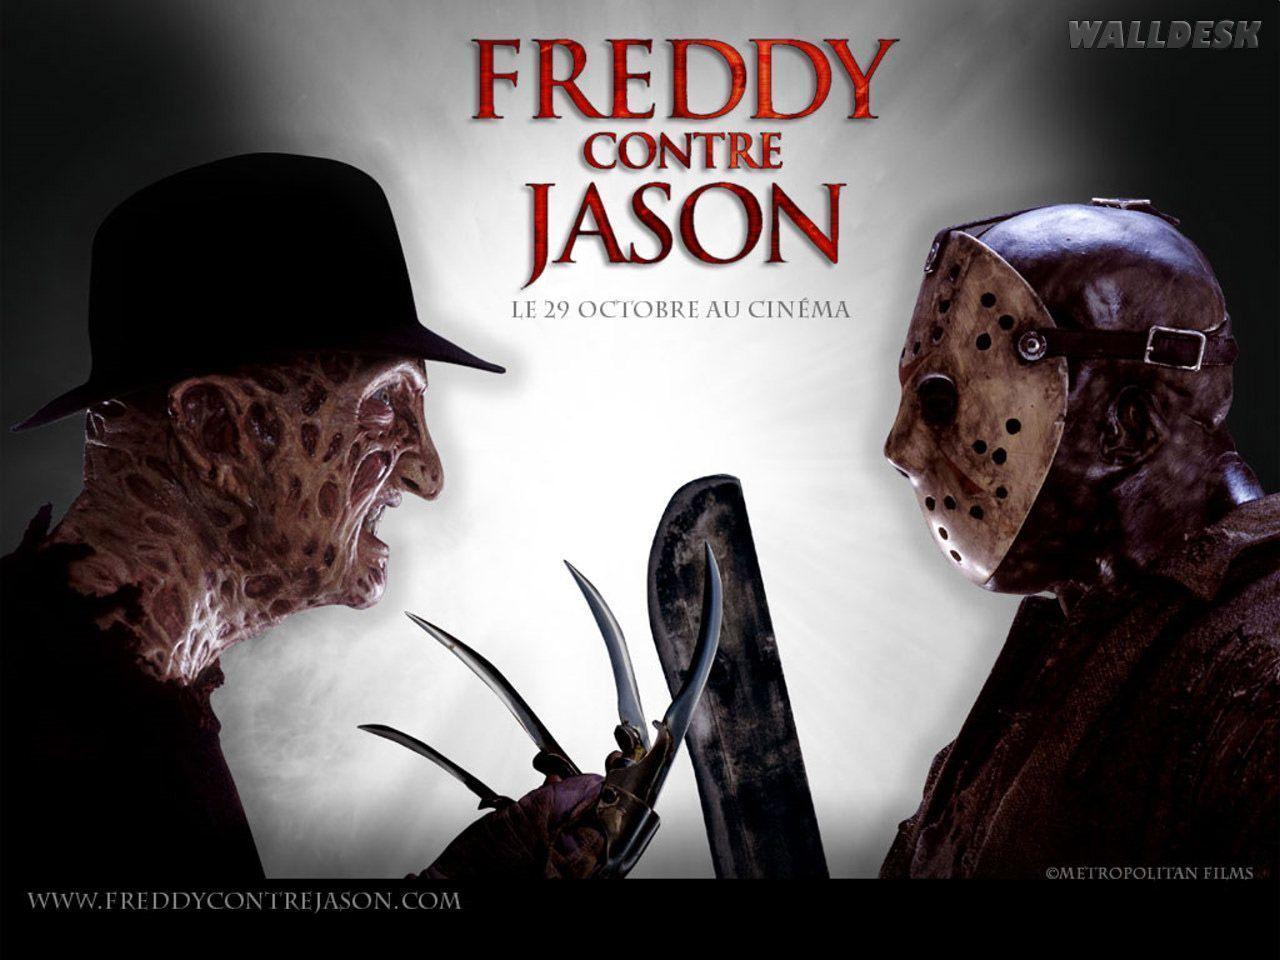 Papel de parede Freddy vs Jason fotos grátis. Papéis de parede